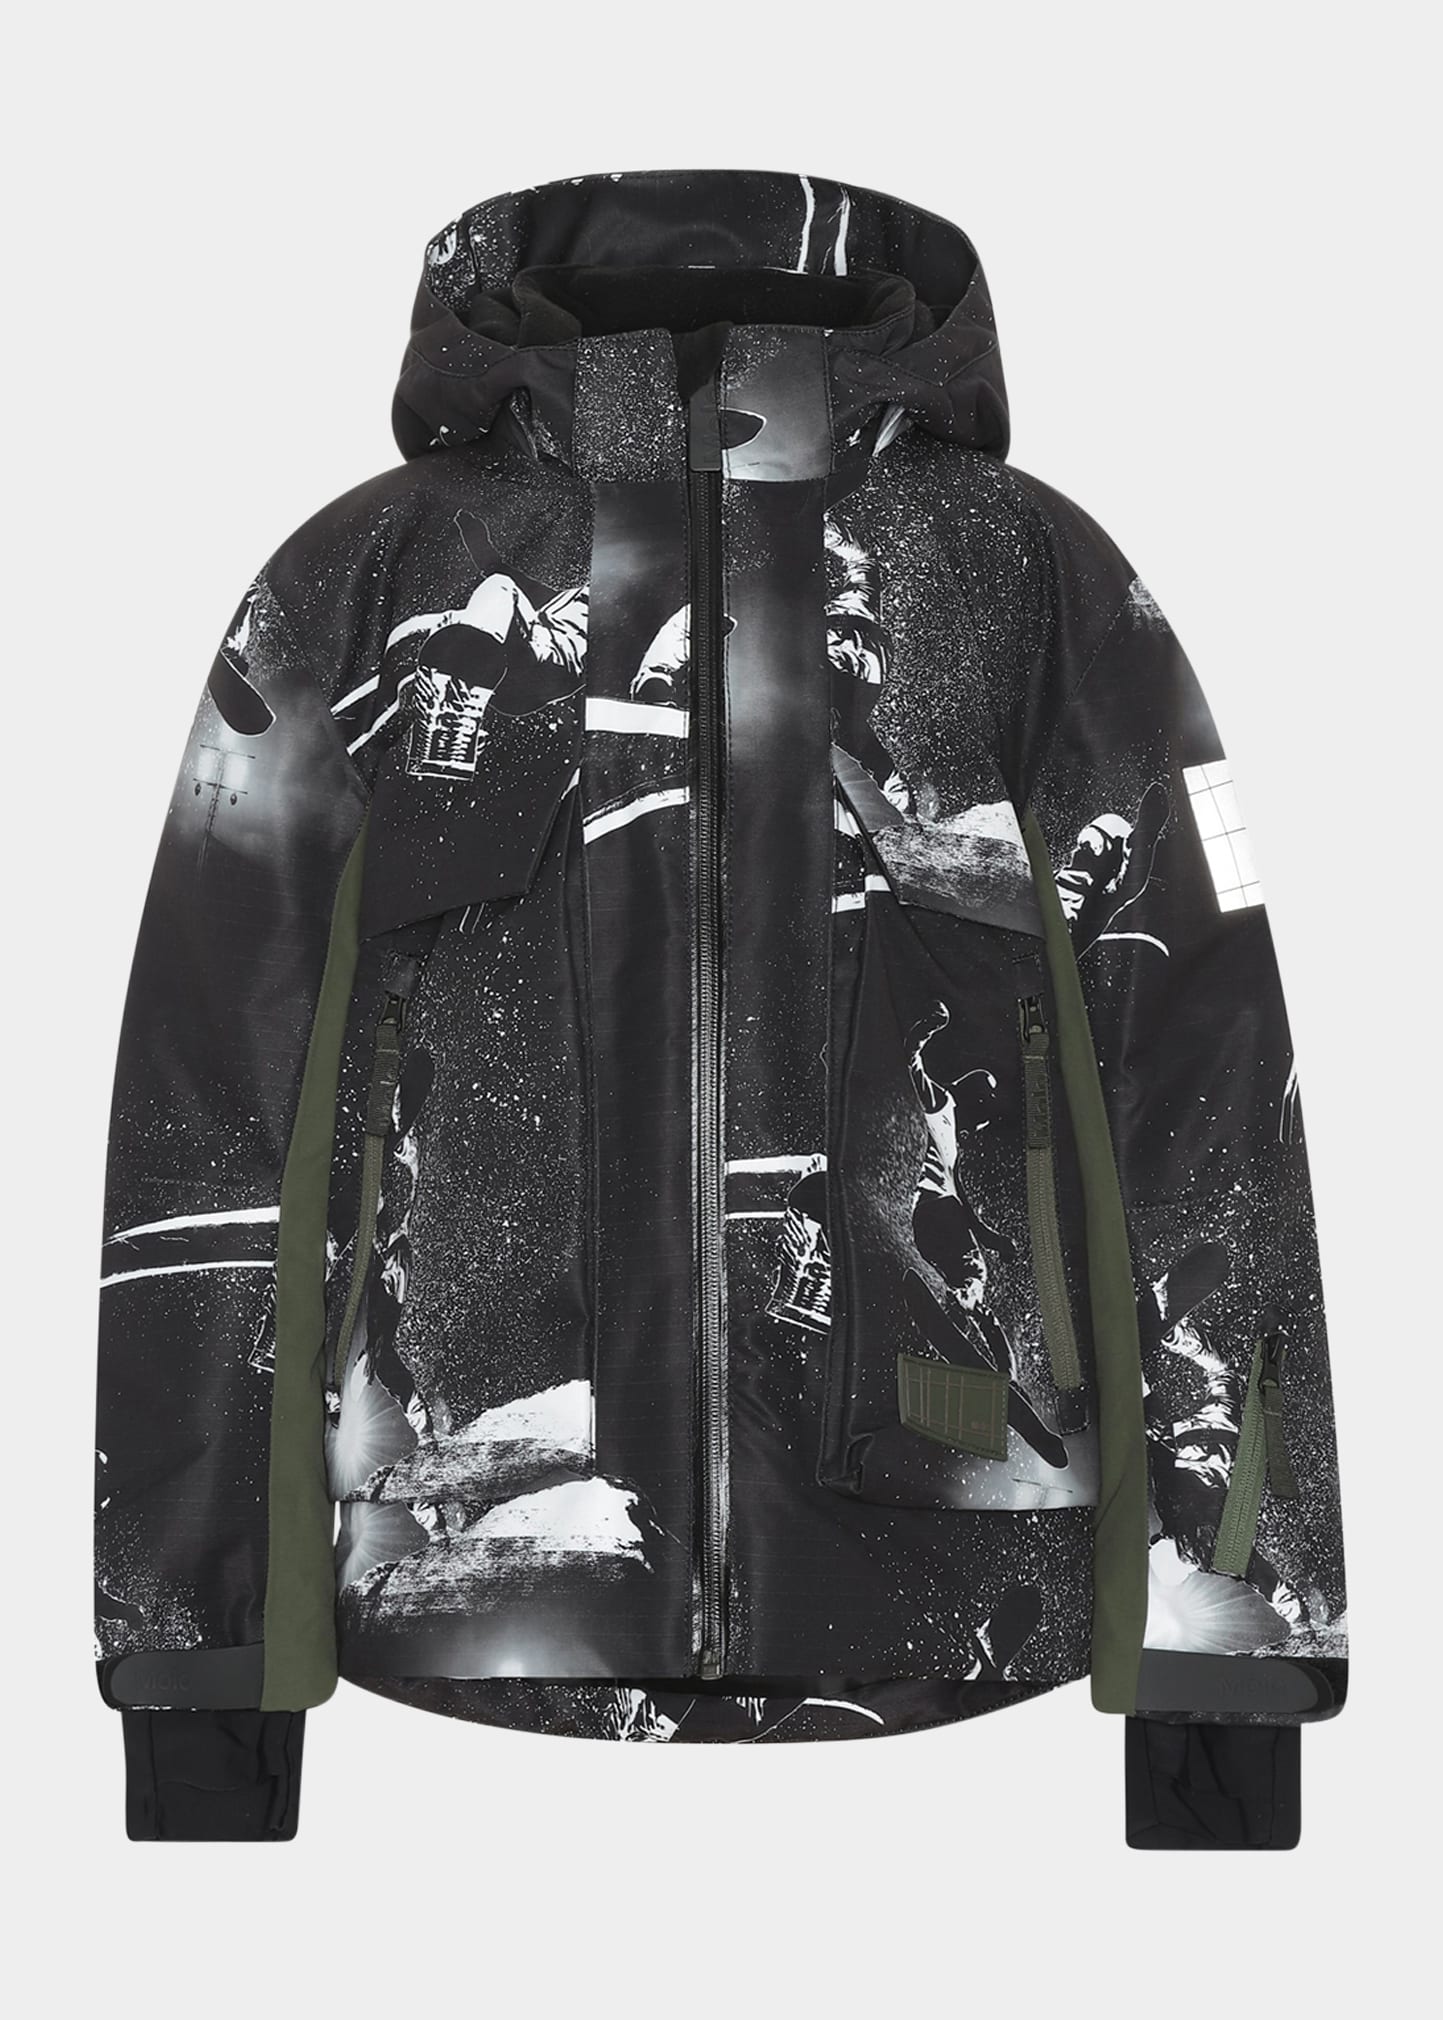 Boy's Wind & Water-Resistant Ski Jacket, Size 8-14